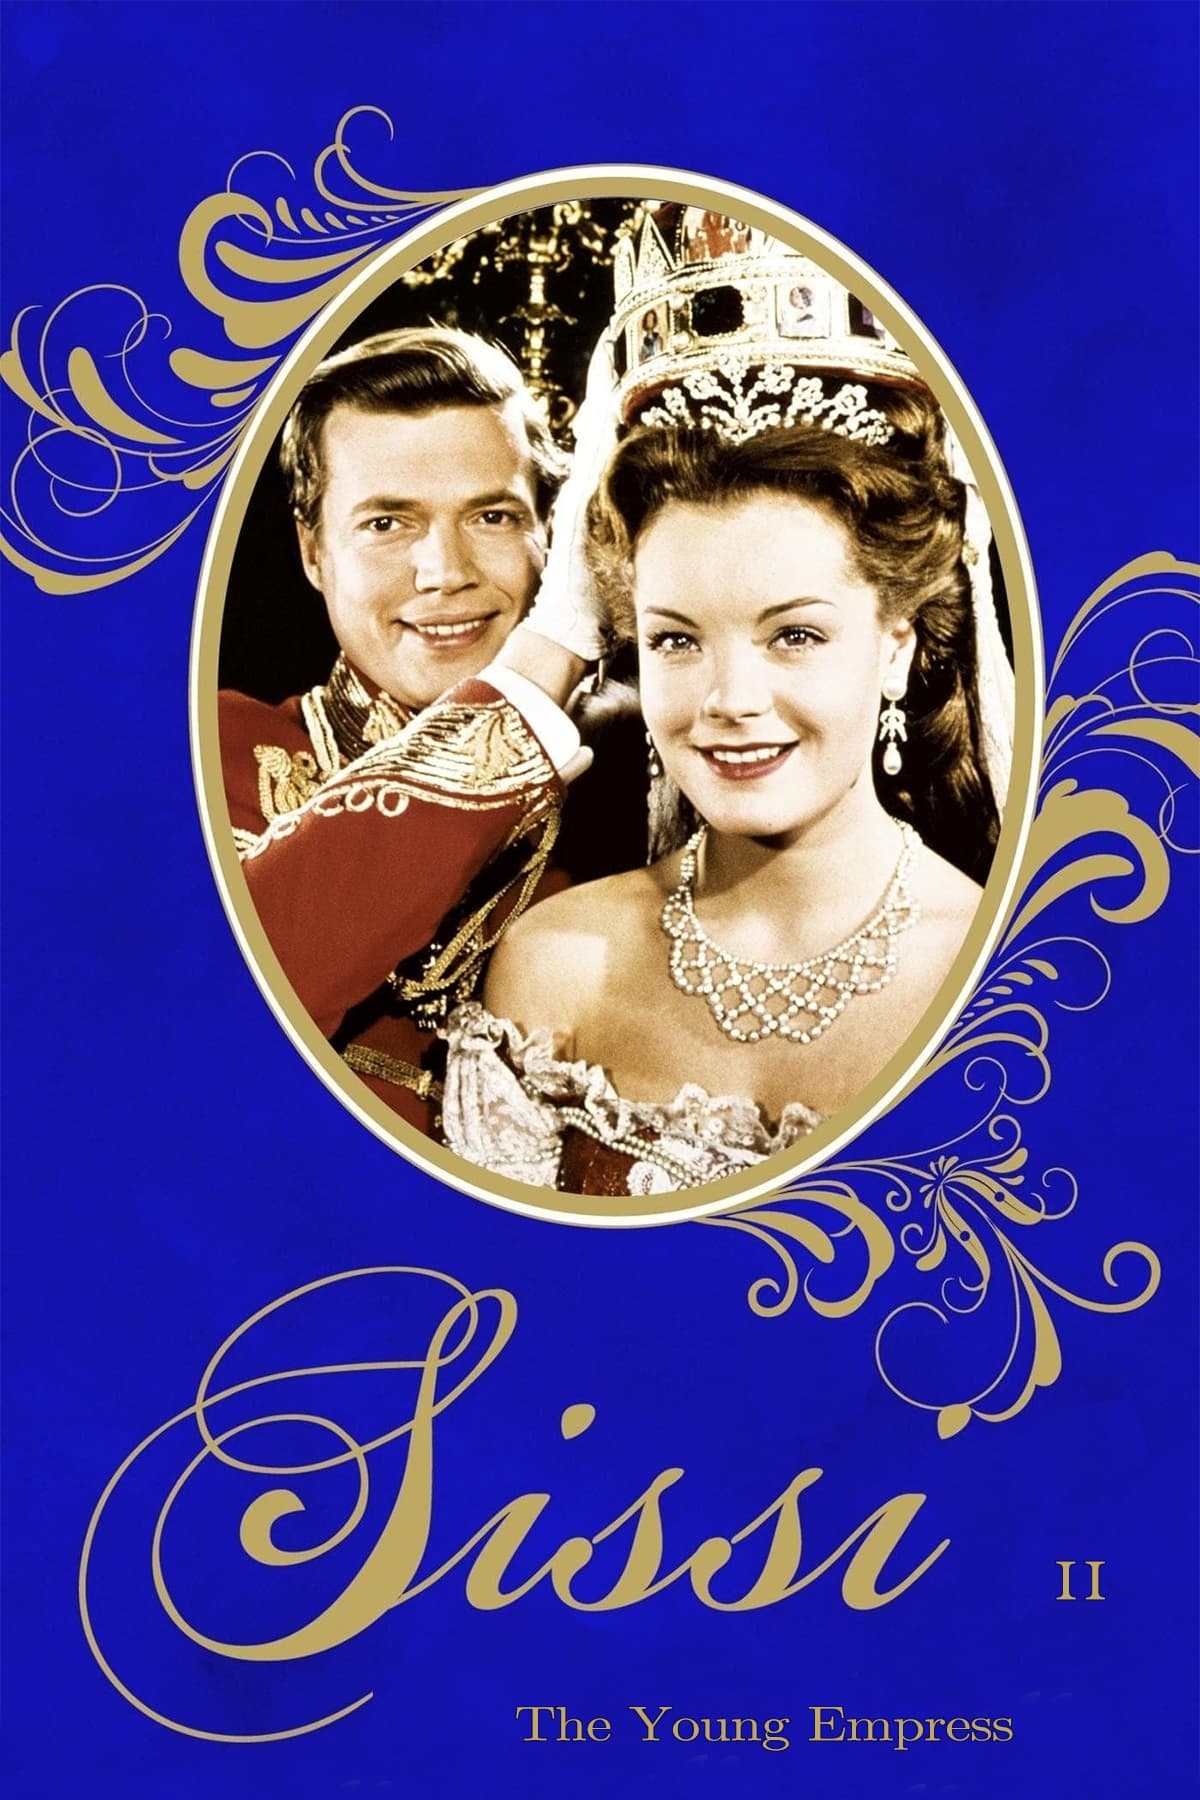 Sissi Emperatriz (1956)